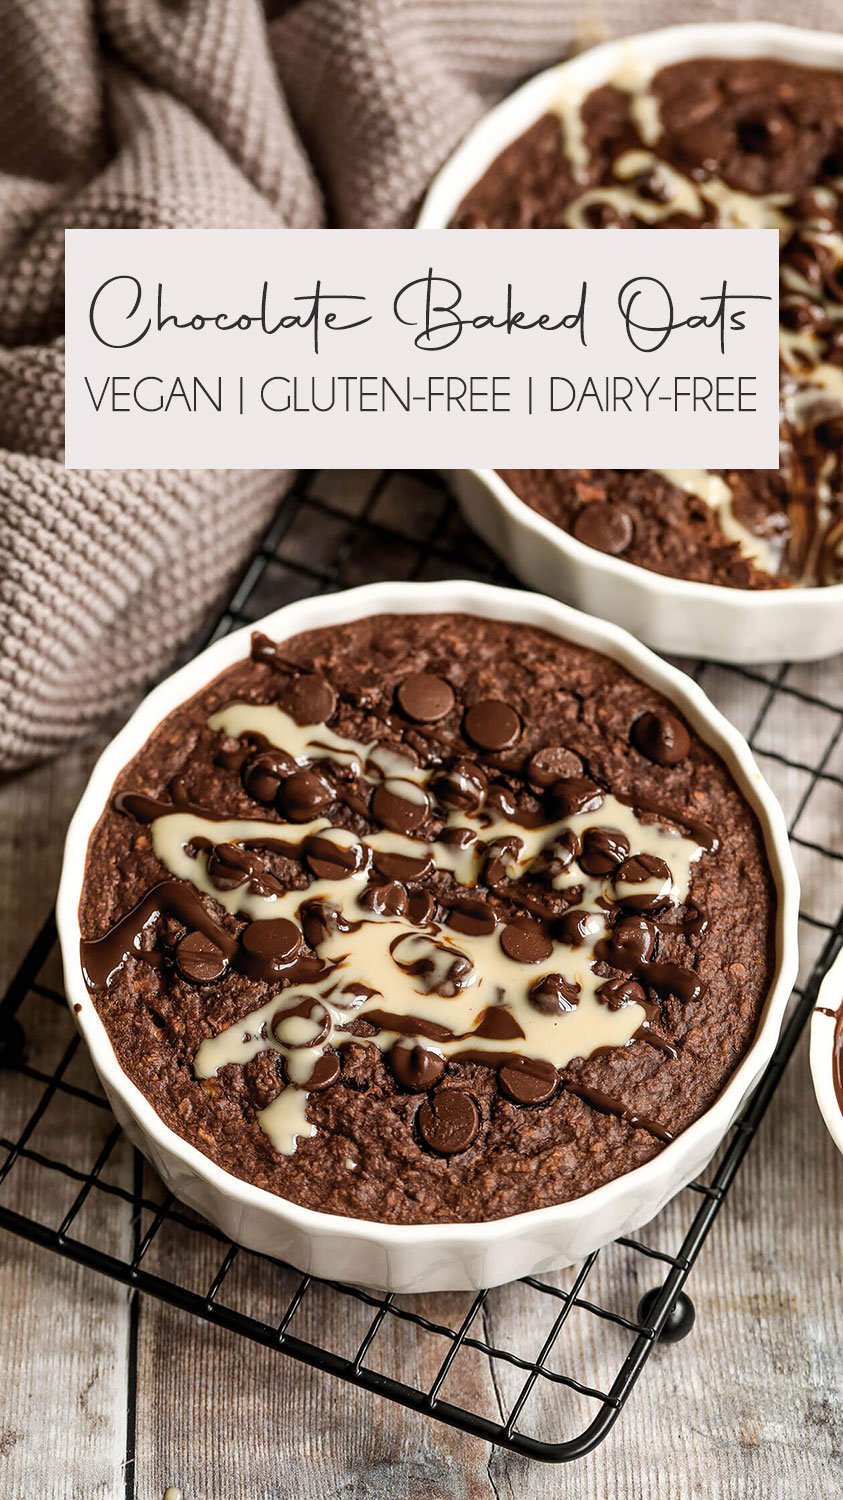 Vegan Gluten-free Baked Chocolate Oats